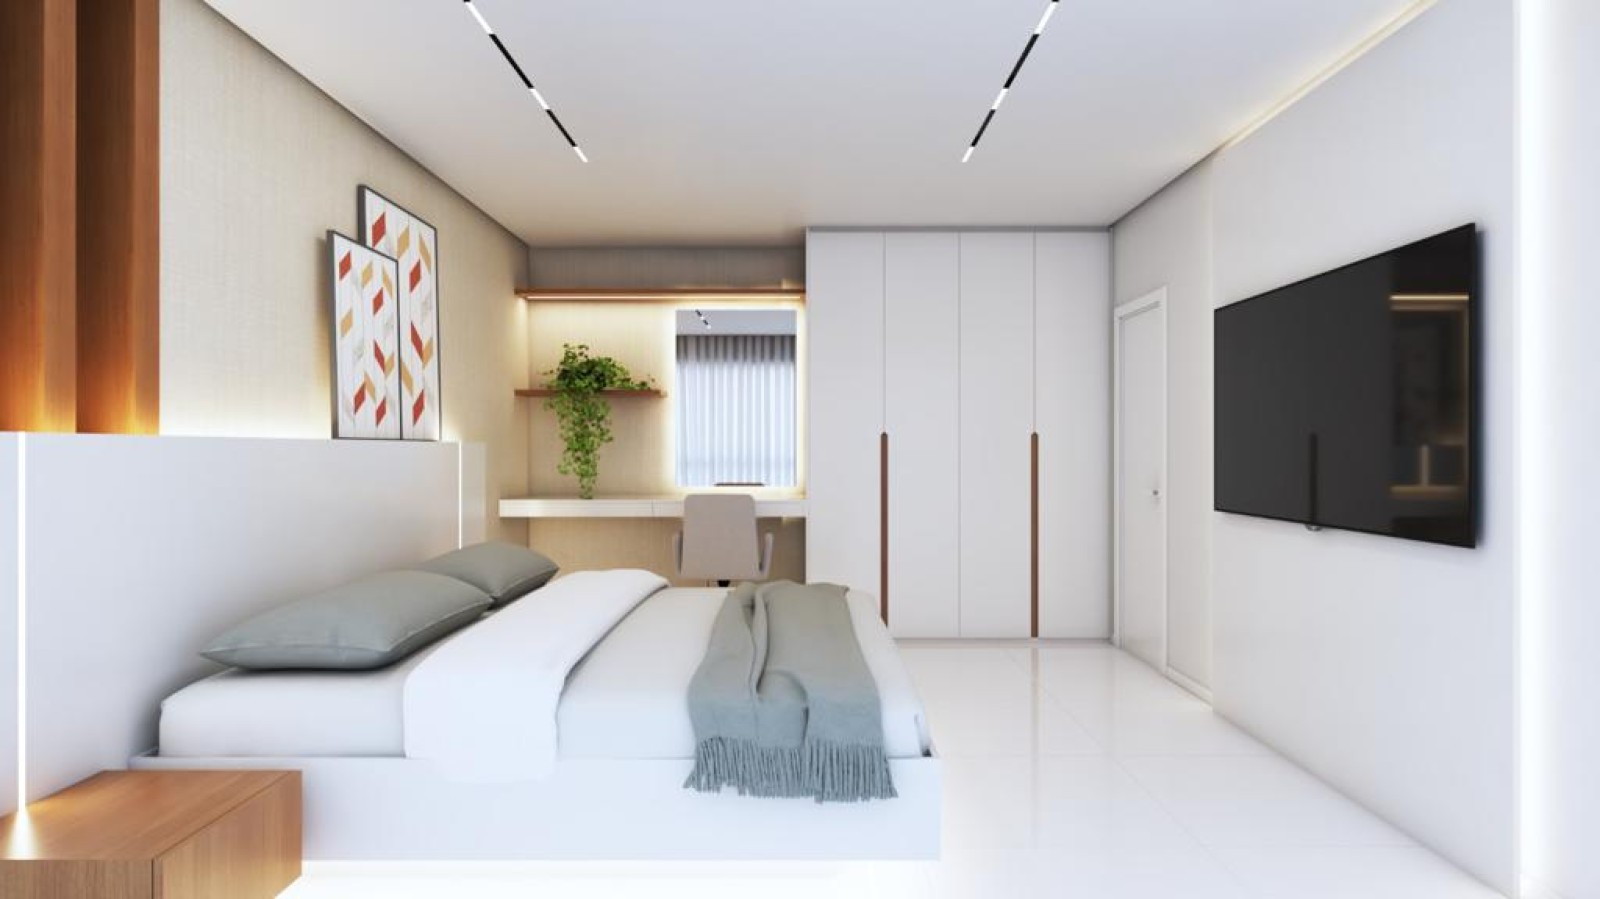 3 Bedroom Luxury House, for sale, in Portimão, Algarve_224340